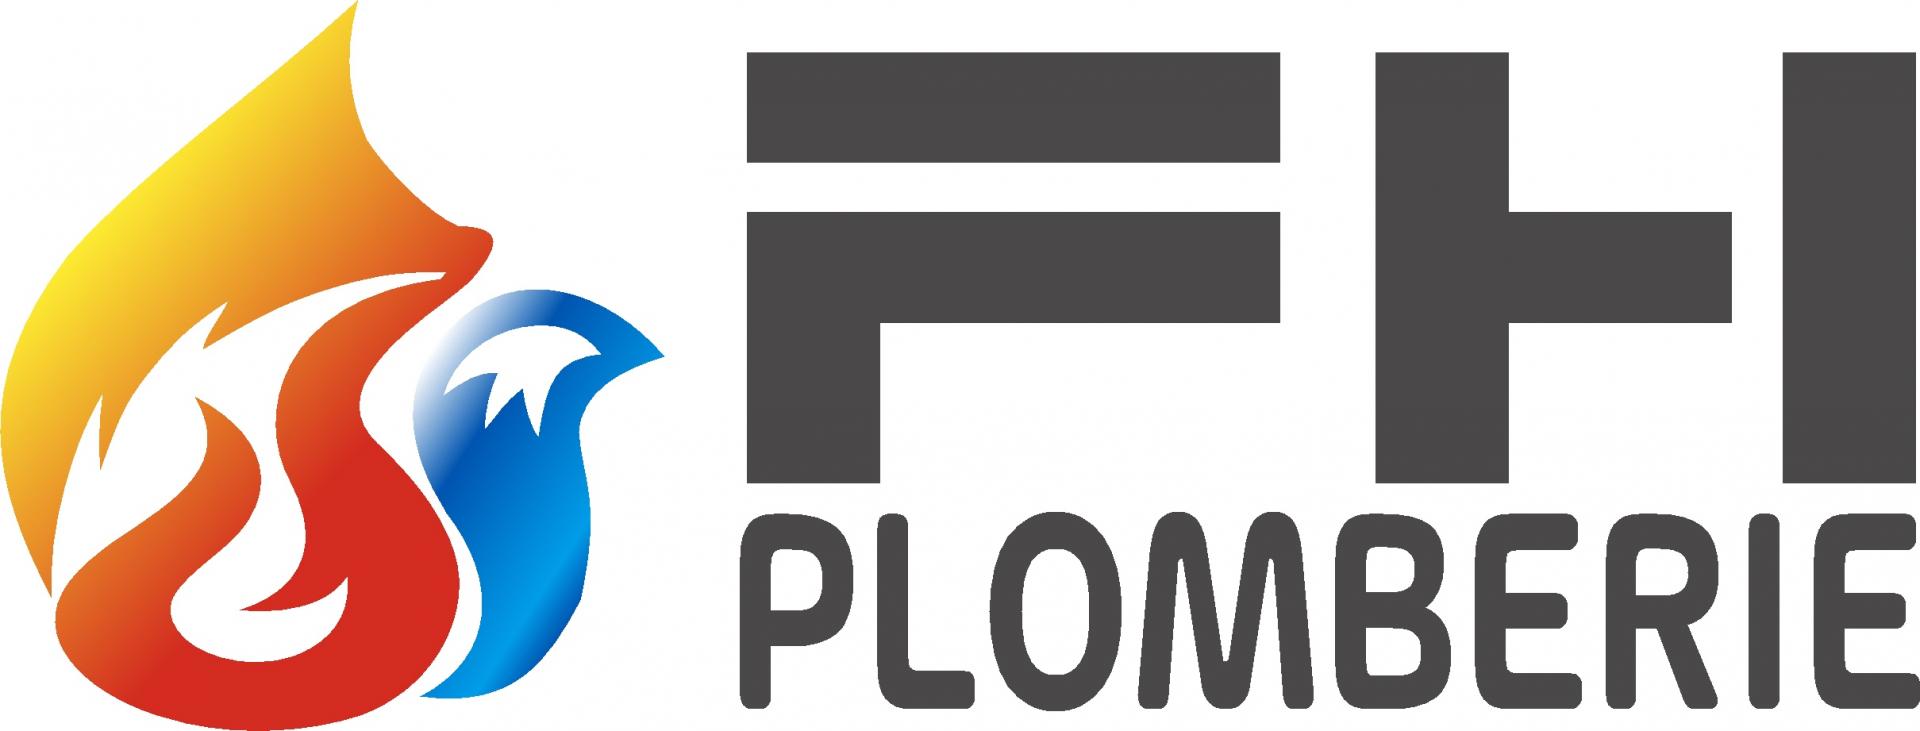 Fh plomberie logo